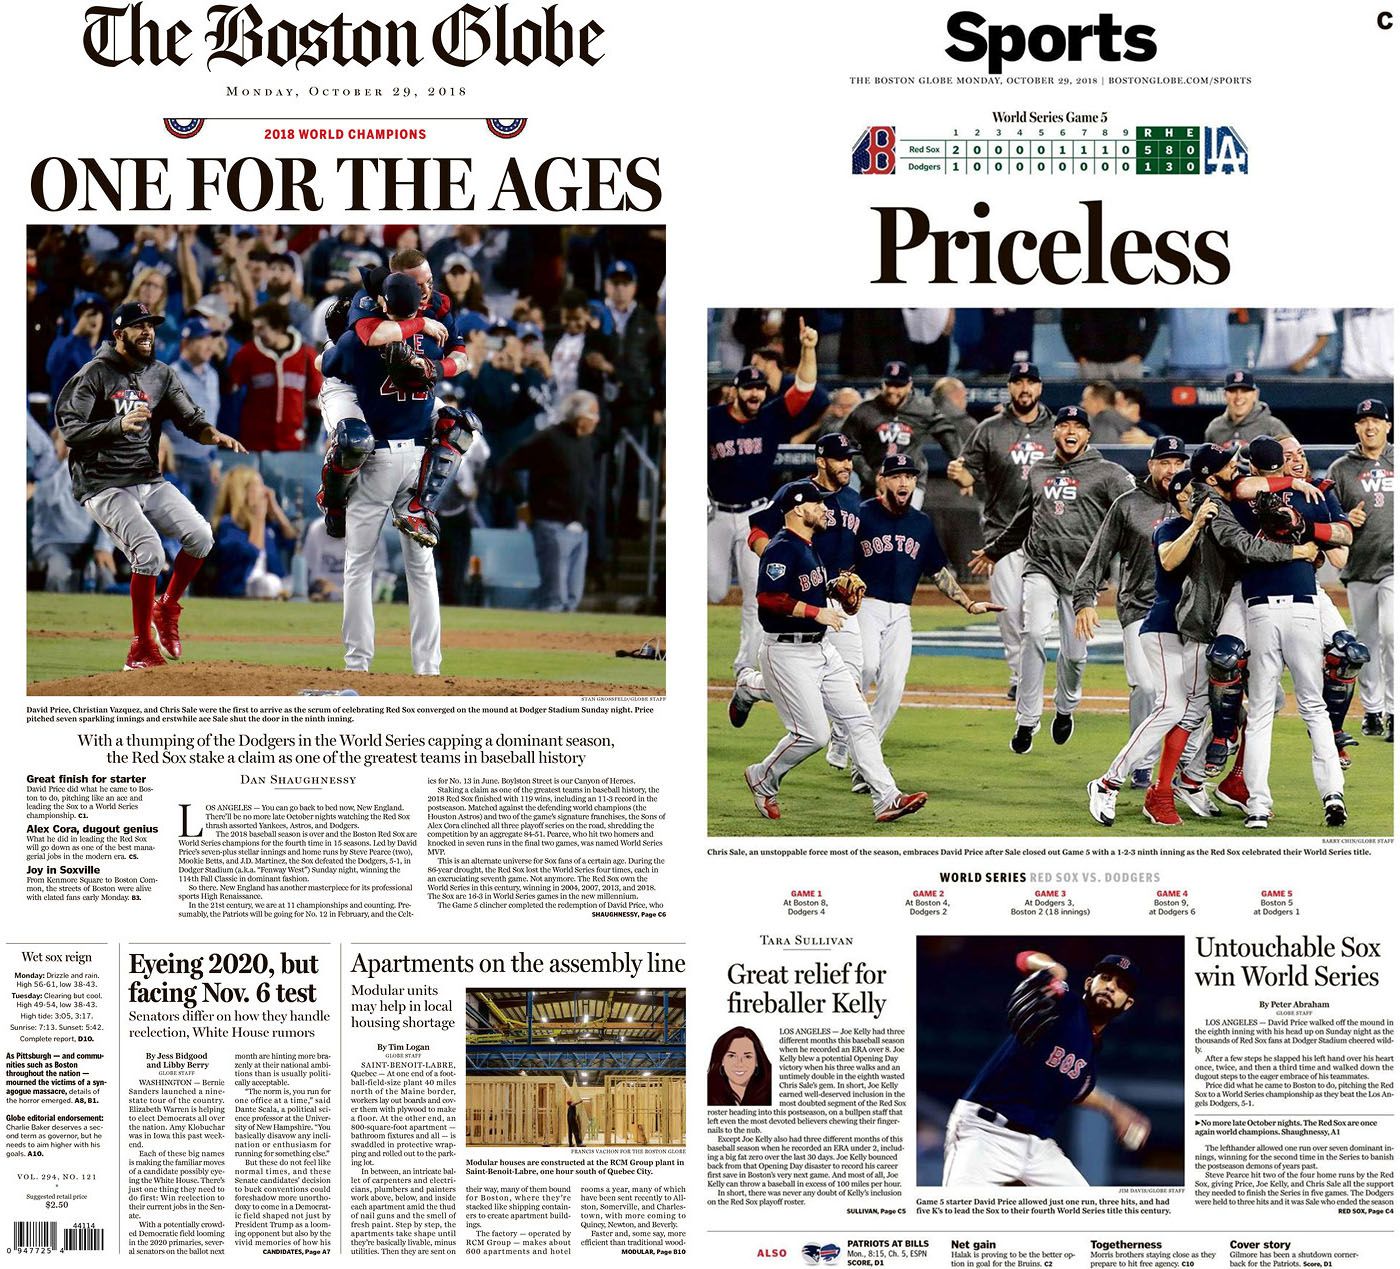 Red Sox win the 2018 World Series - The Boston Globe